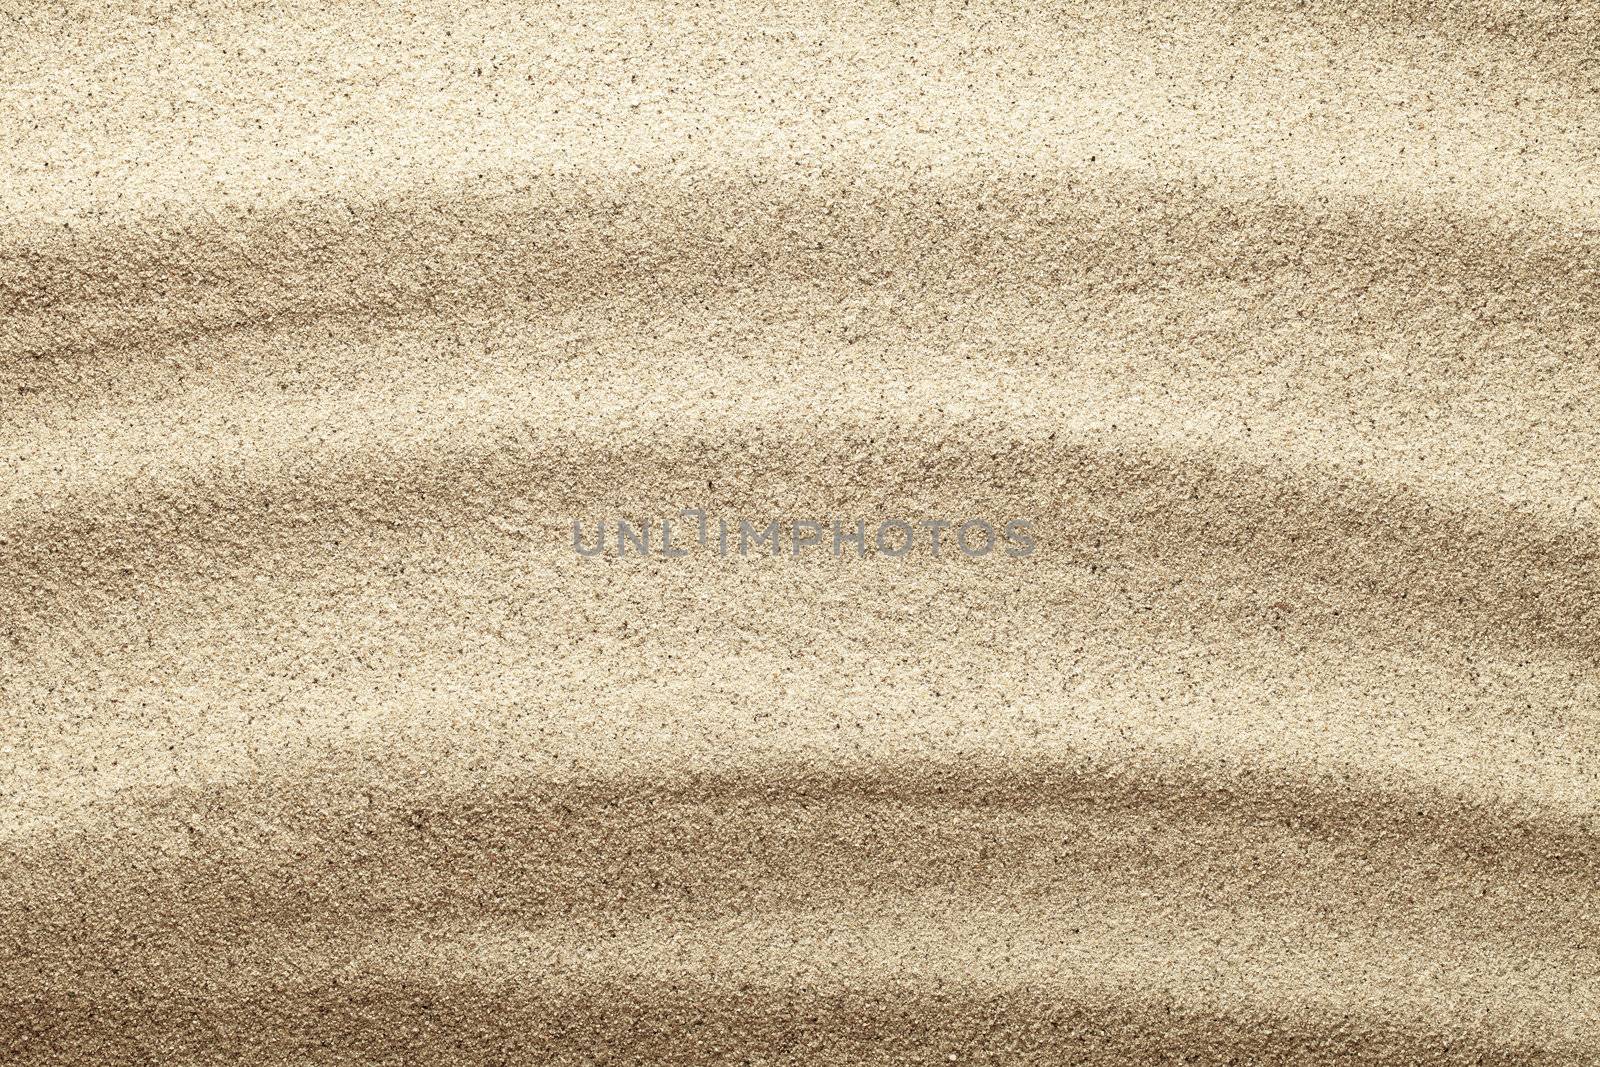 Sandy beach background. Sand texture. Top view